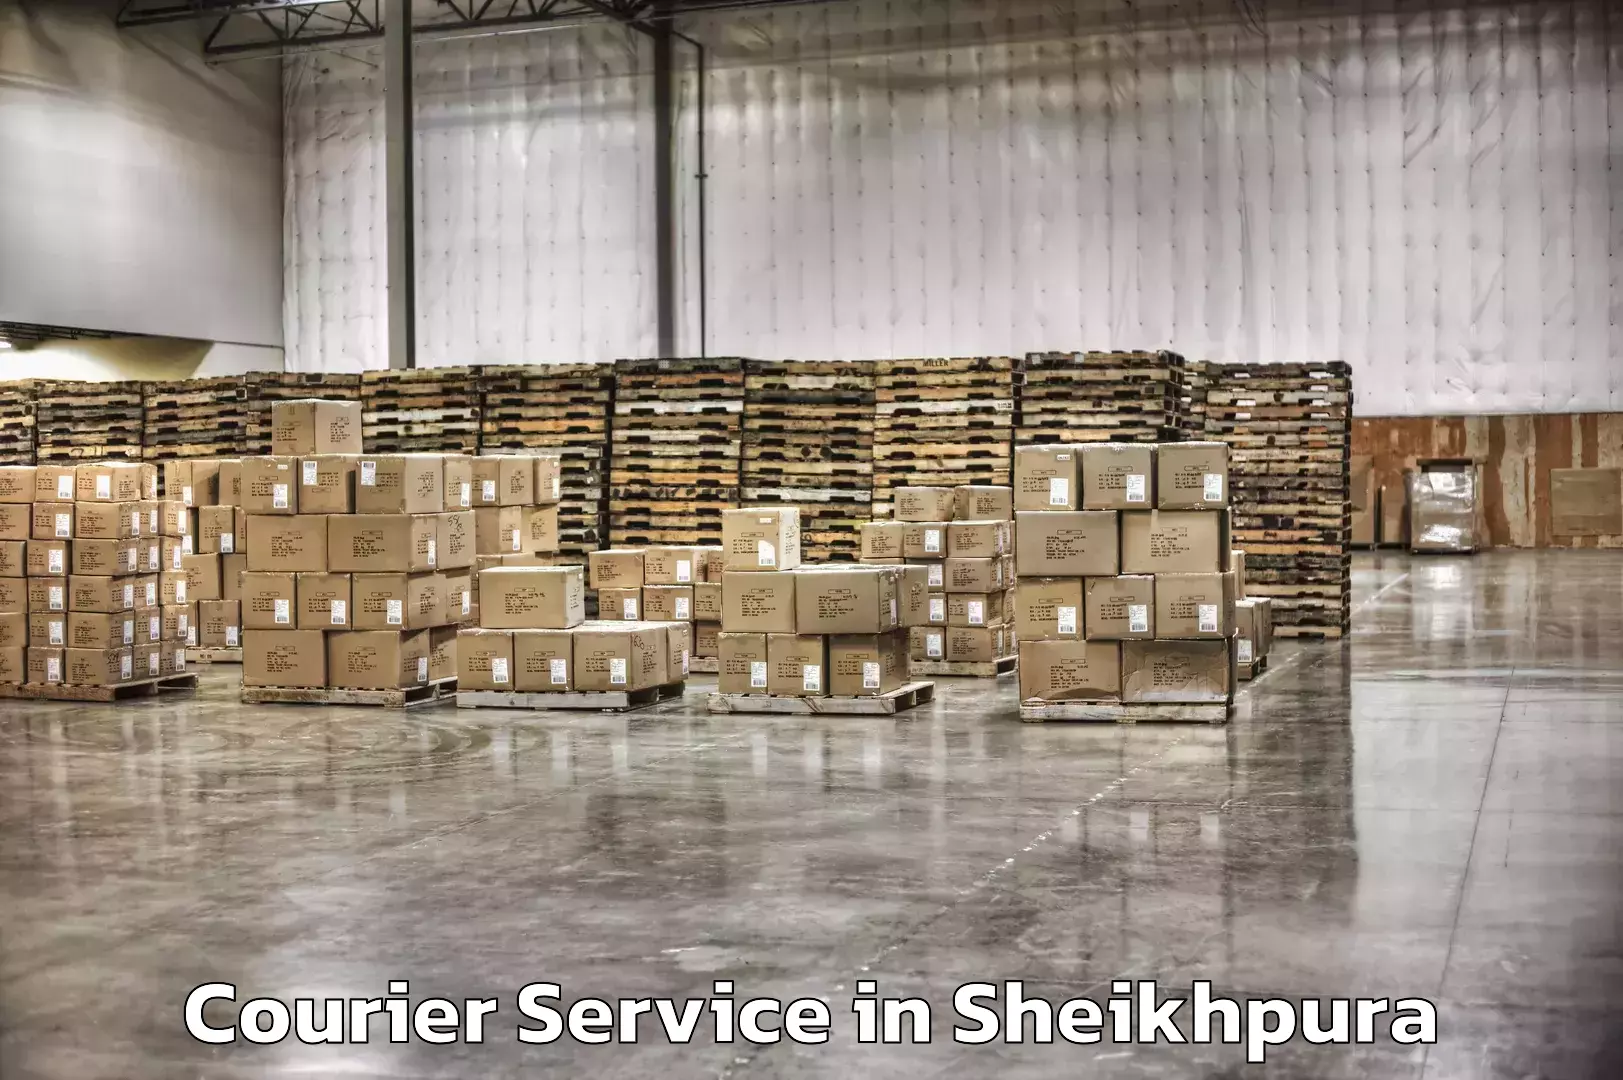 Next-day freight services in Sheikhpura